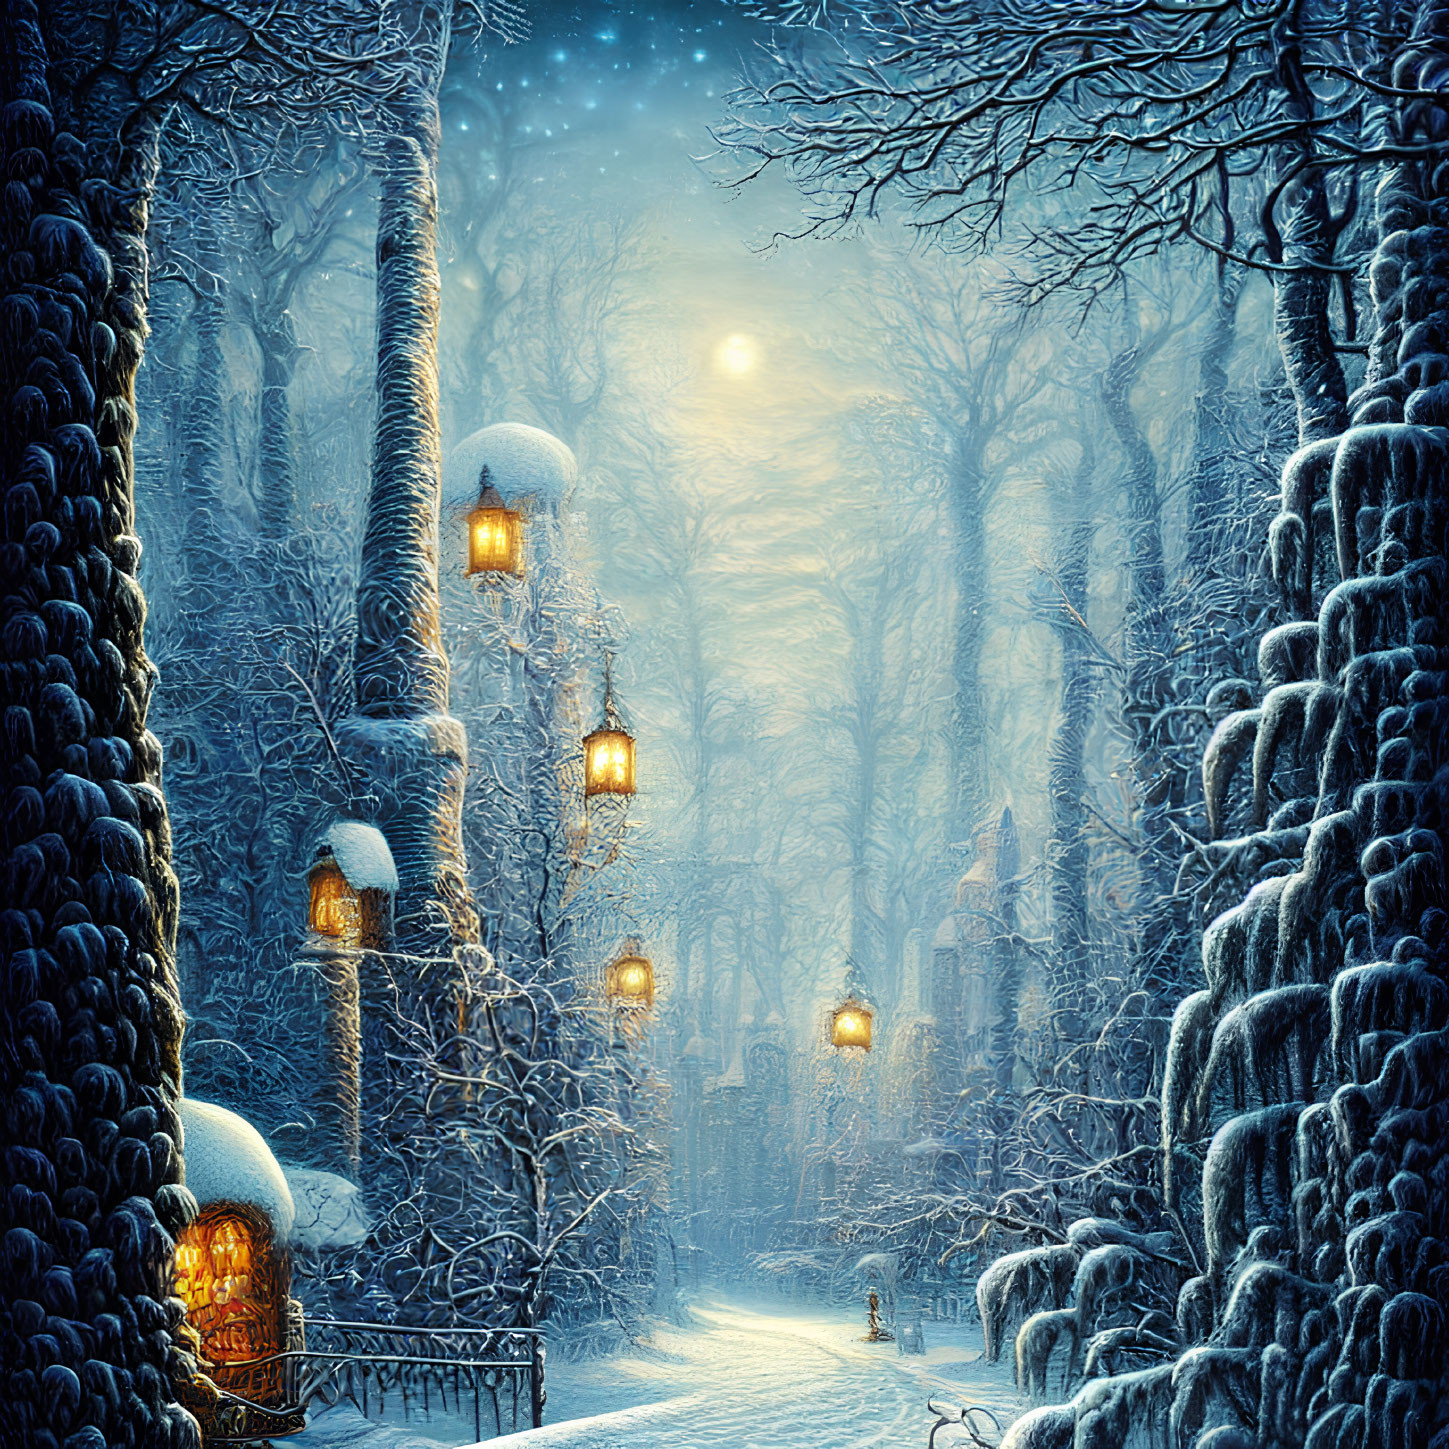 Snowy Twilight Scene: Lamplit Path Through Tranquil Snowy Forest